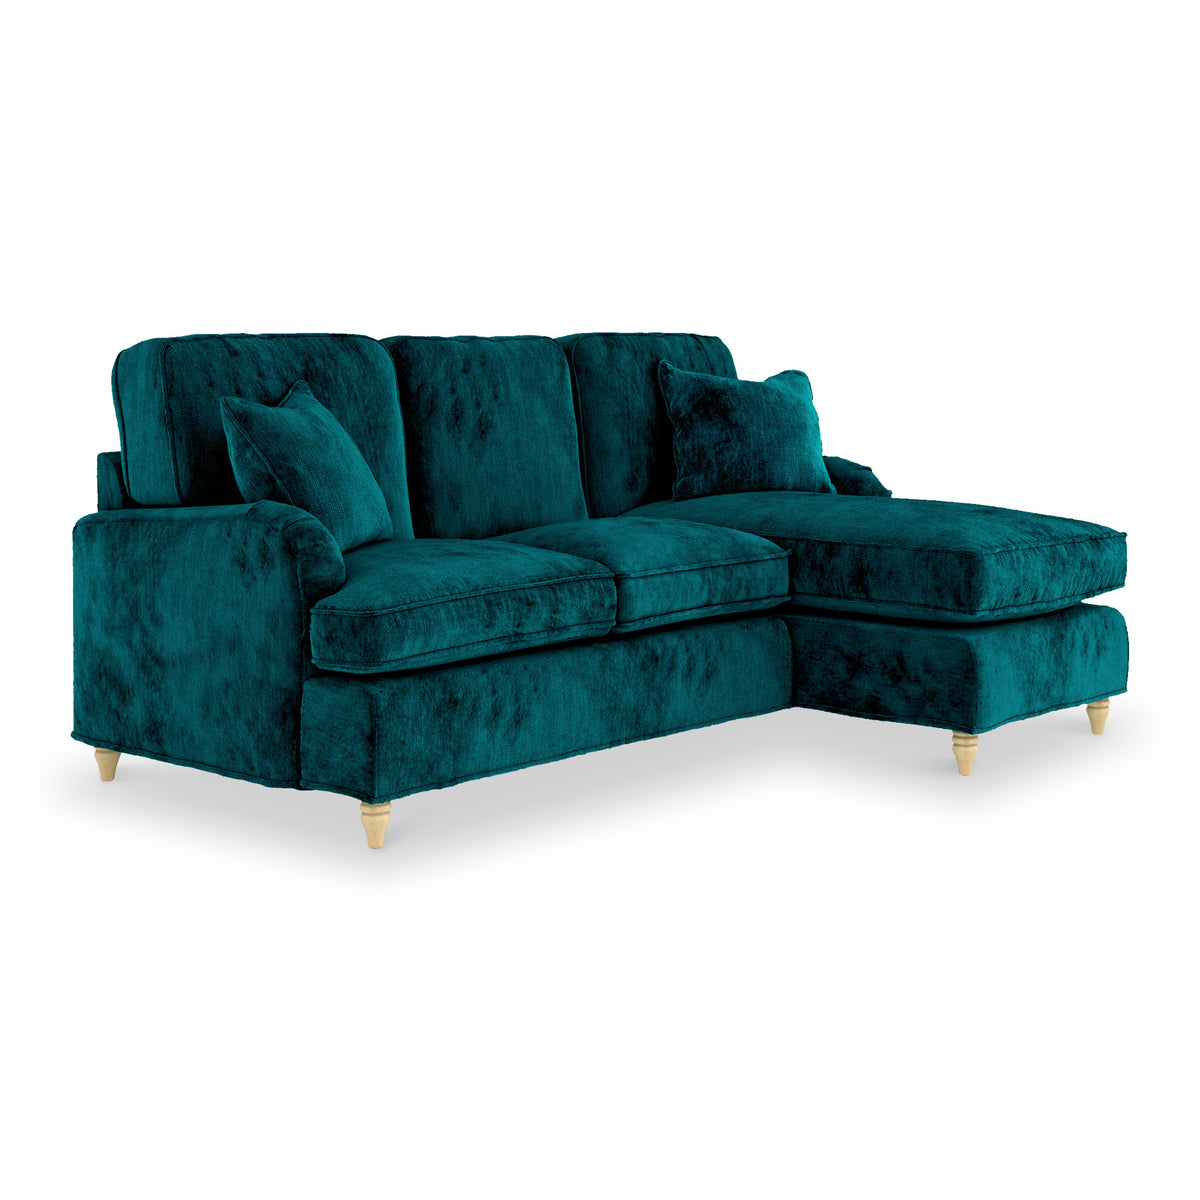 Arthur Emerald Green RH Chaise Sofa from Roseland Furniture